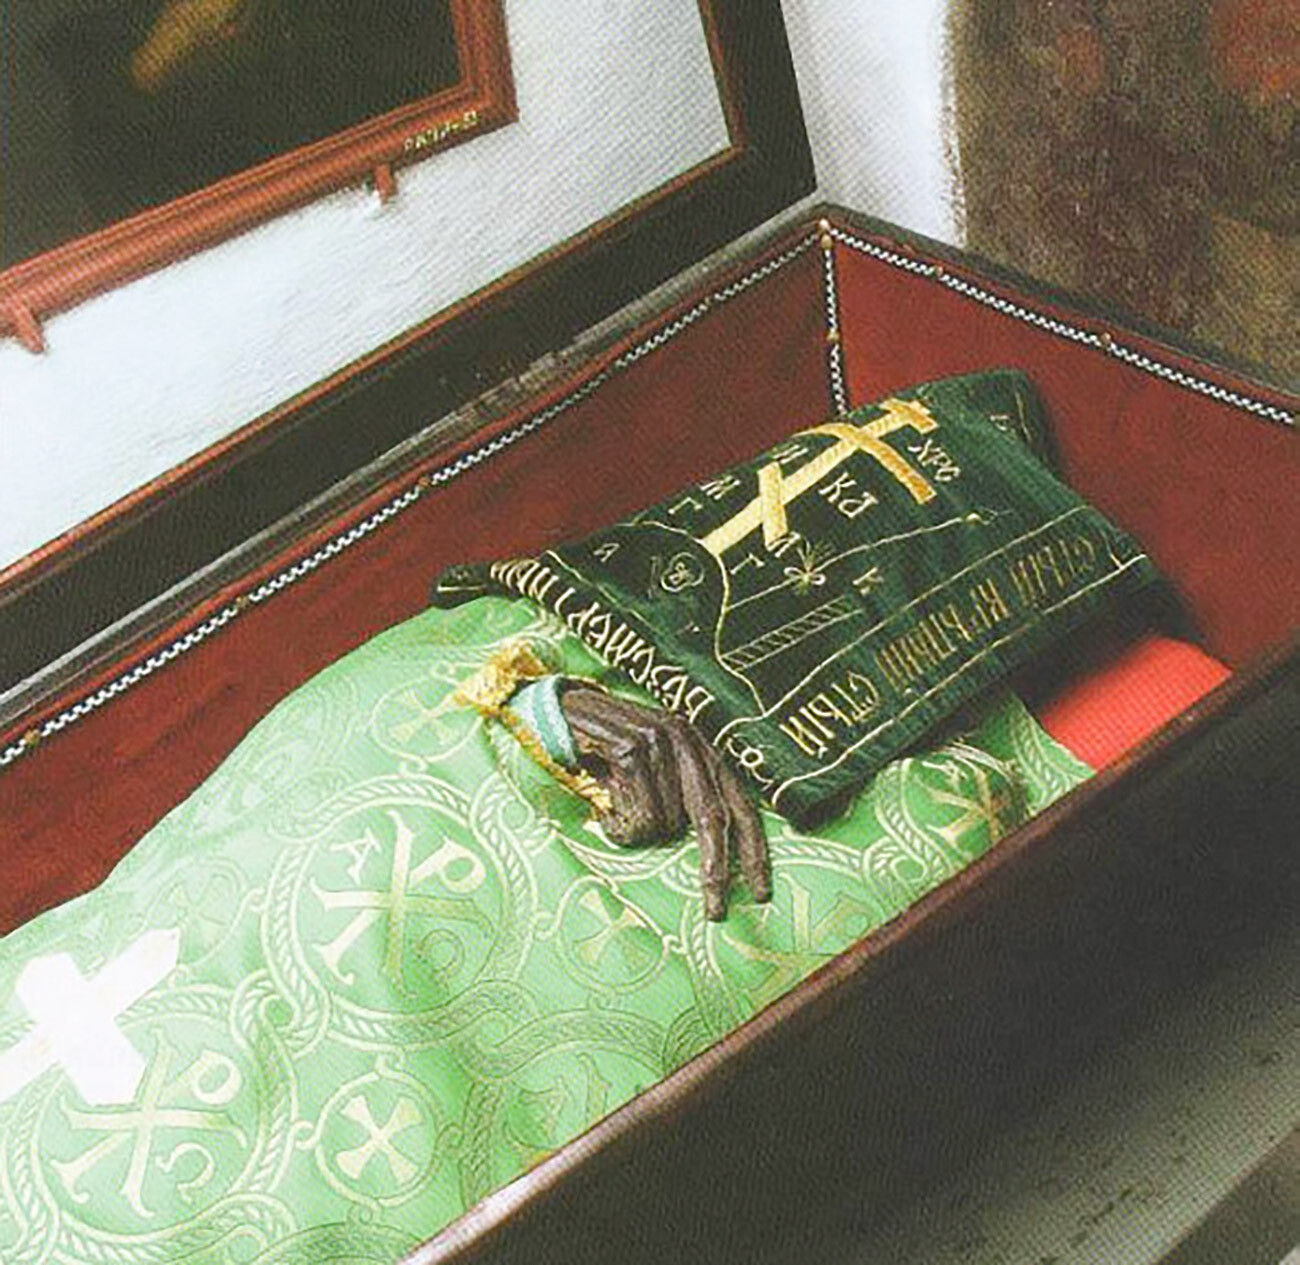 Iliya Pecherskiy's relics in the Kiyv-Pechersk Lavra